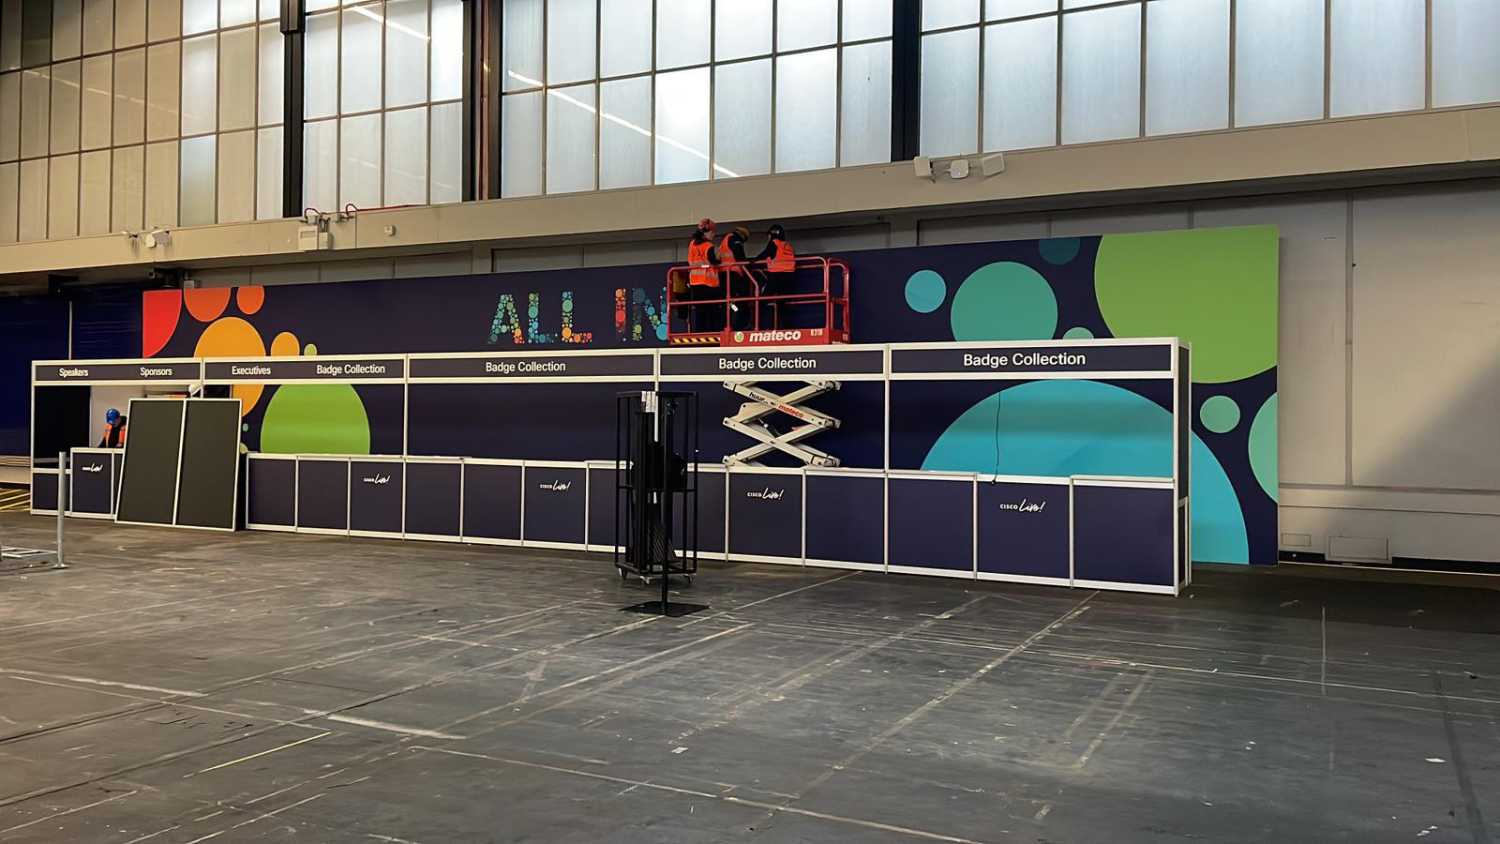 Cisco Live 2023 took place in the Amsterdam RAI